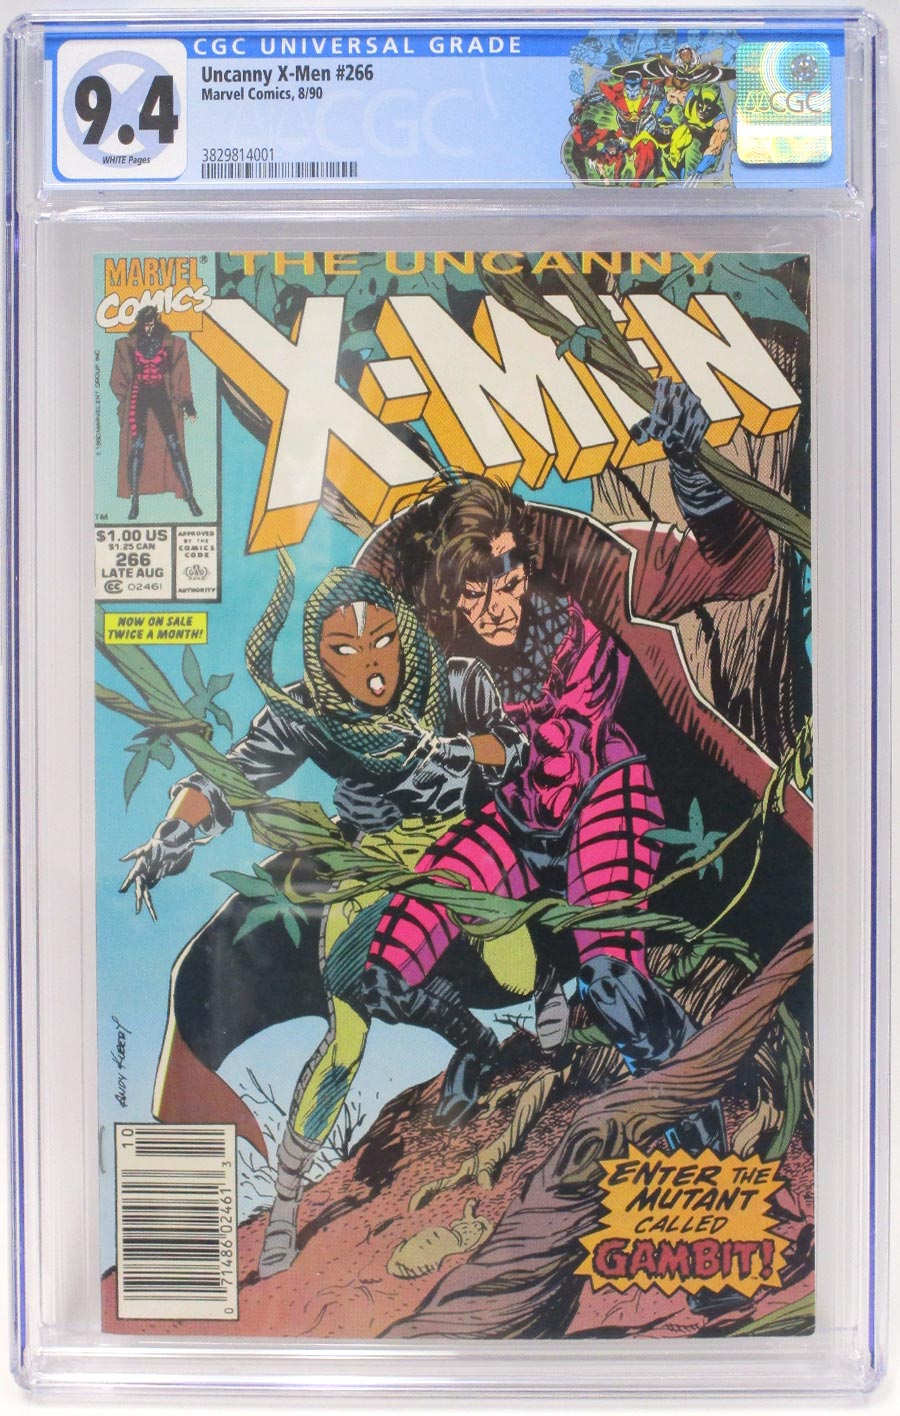 Uncanny X-Men #266 Cover G CGC 9.4